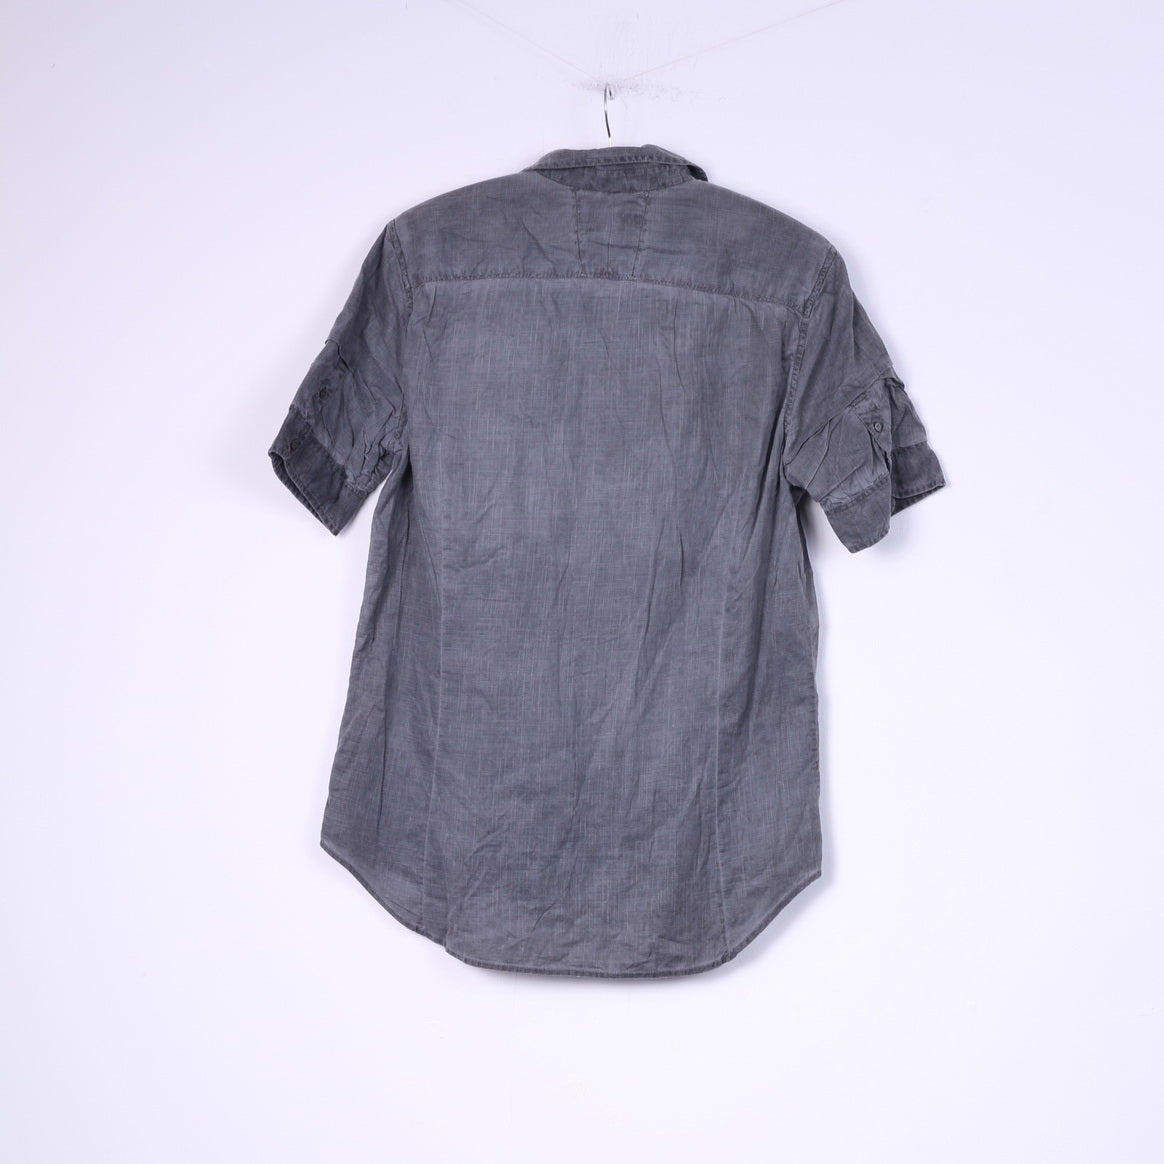 Diesel Mens M Casual Shirt Short Sleeve Grey Cotton Summer Top